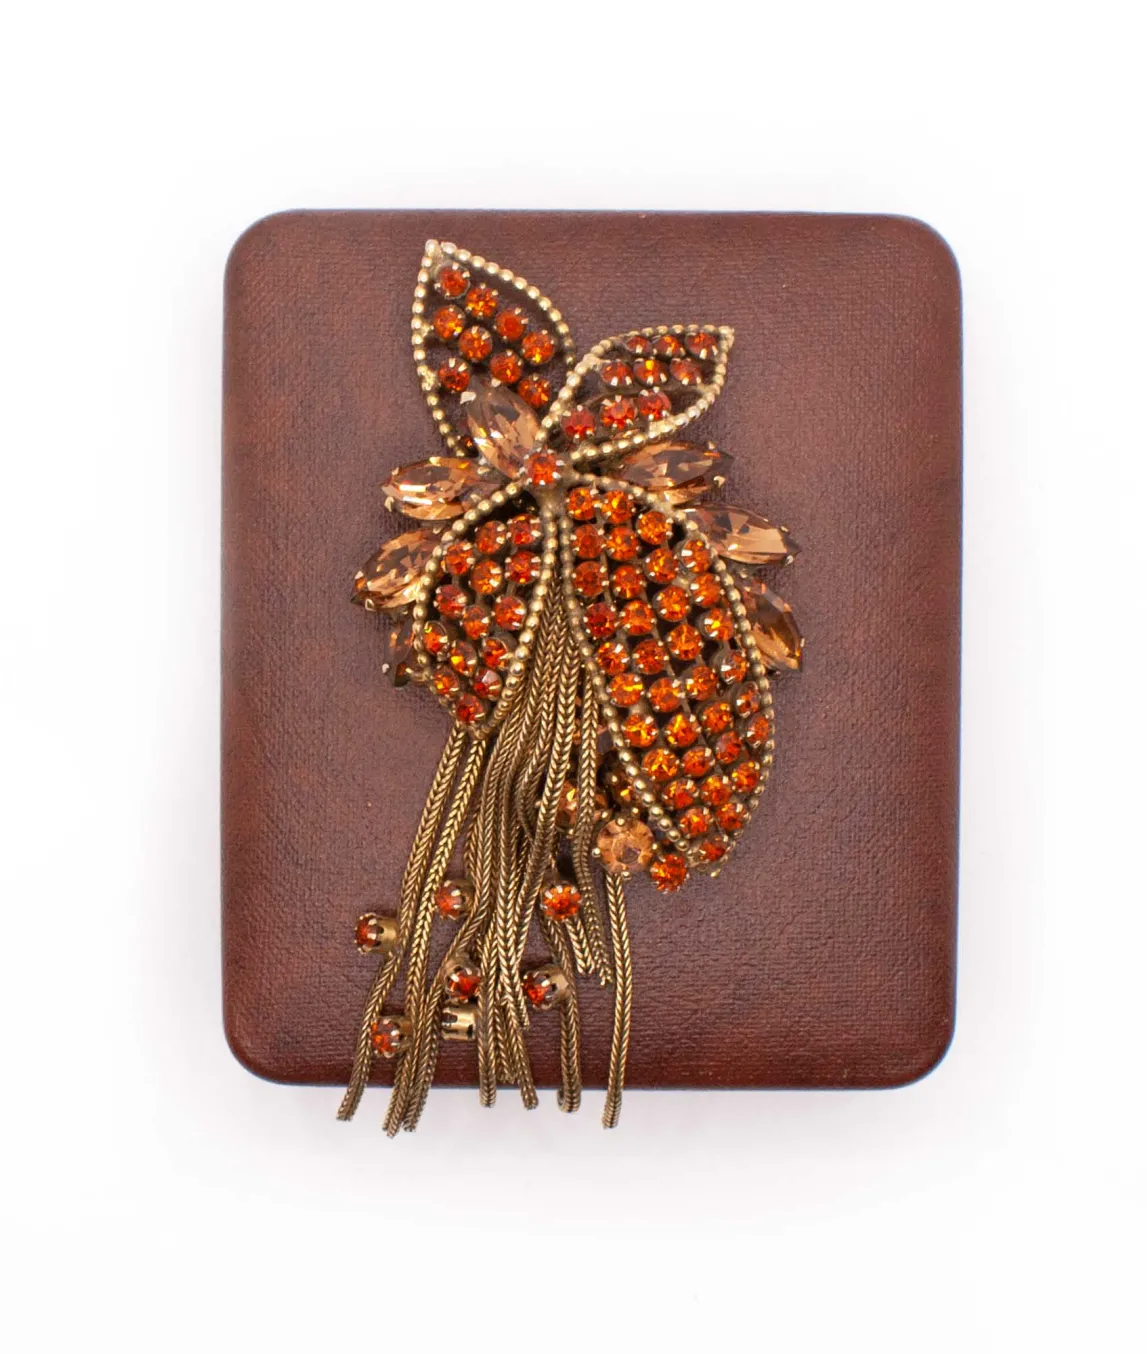 Large Vendôme Amber Floral Brooch on brown leatherette box